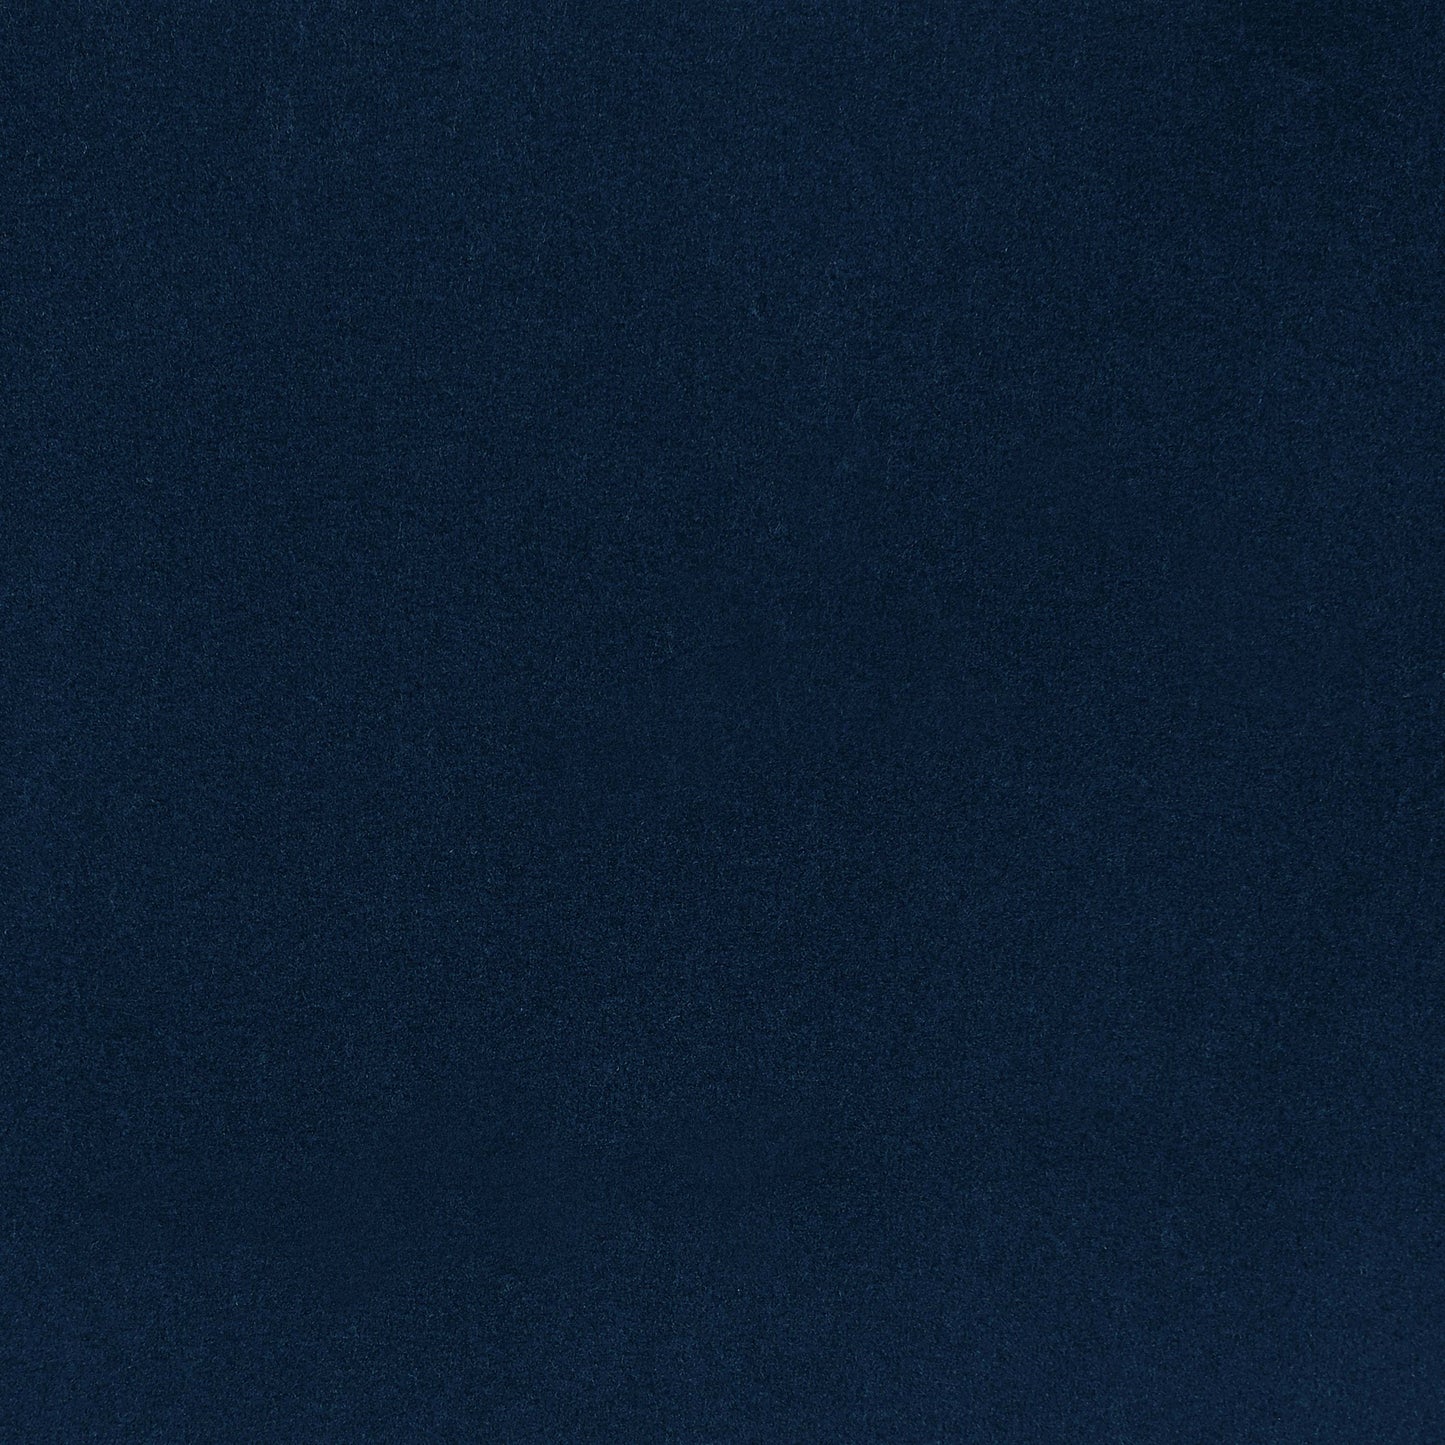 Chalet 3-piece Tuxedo Arm Living Room Set Blue